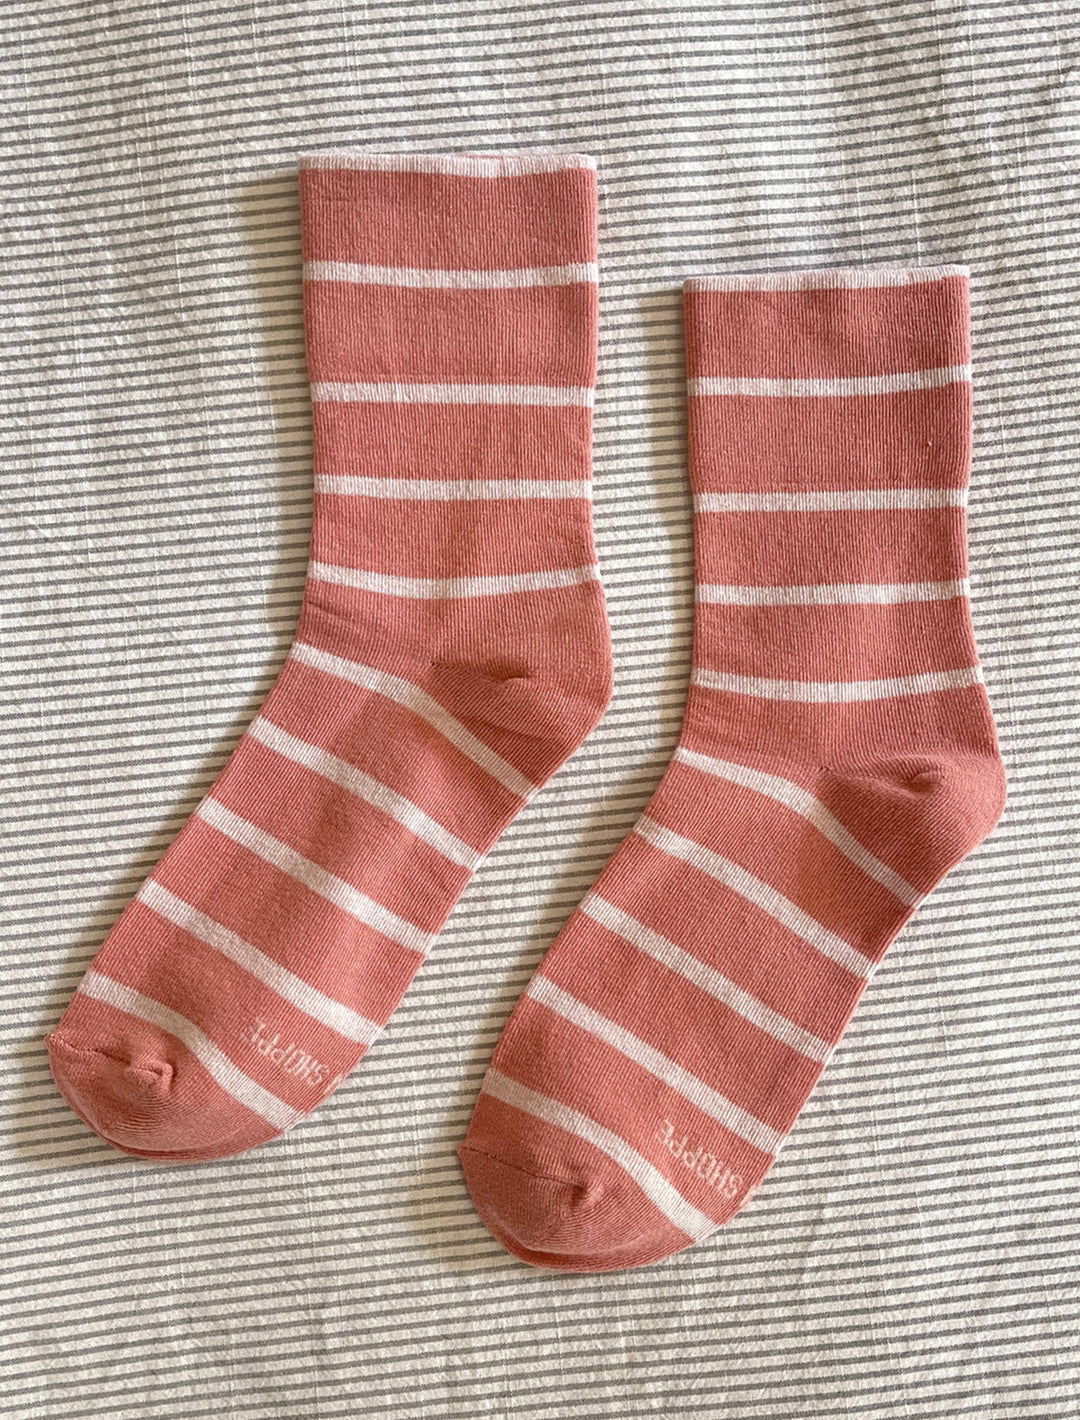 Le Bon Shoppe's wally socks in clay.